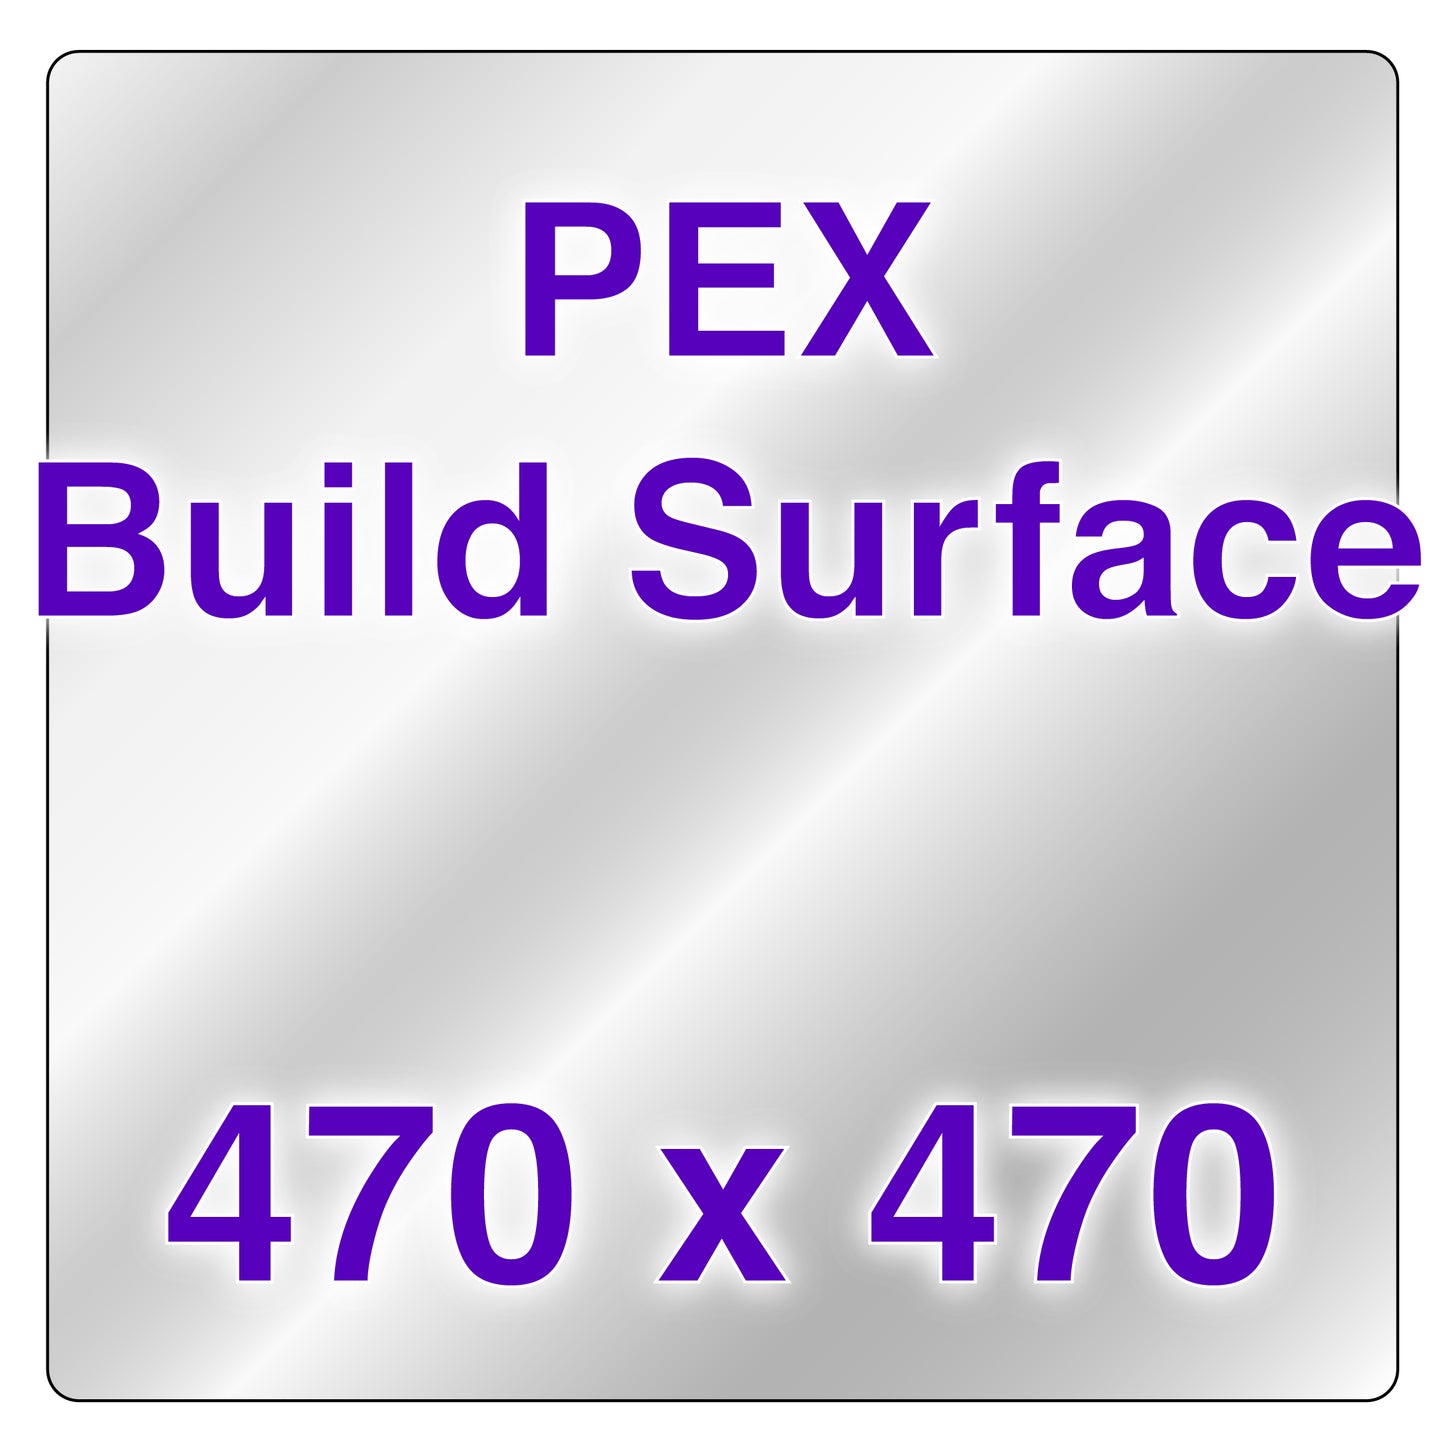 PEX Build Surface - 470 x 470